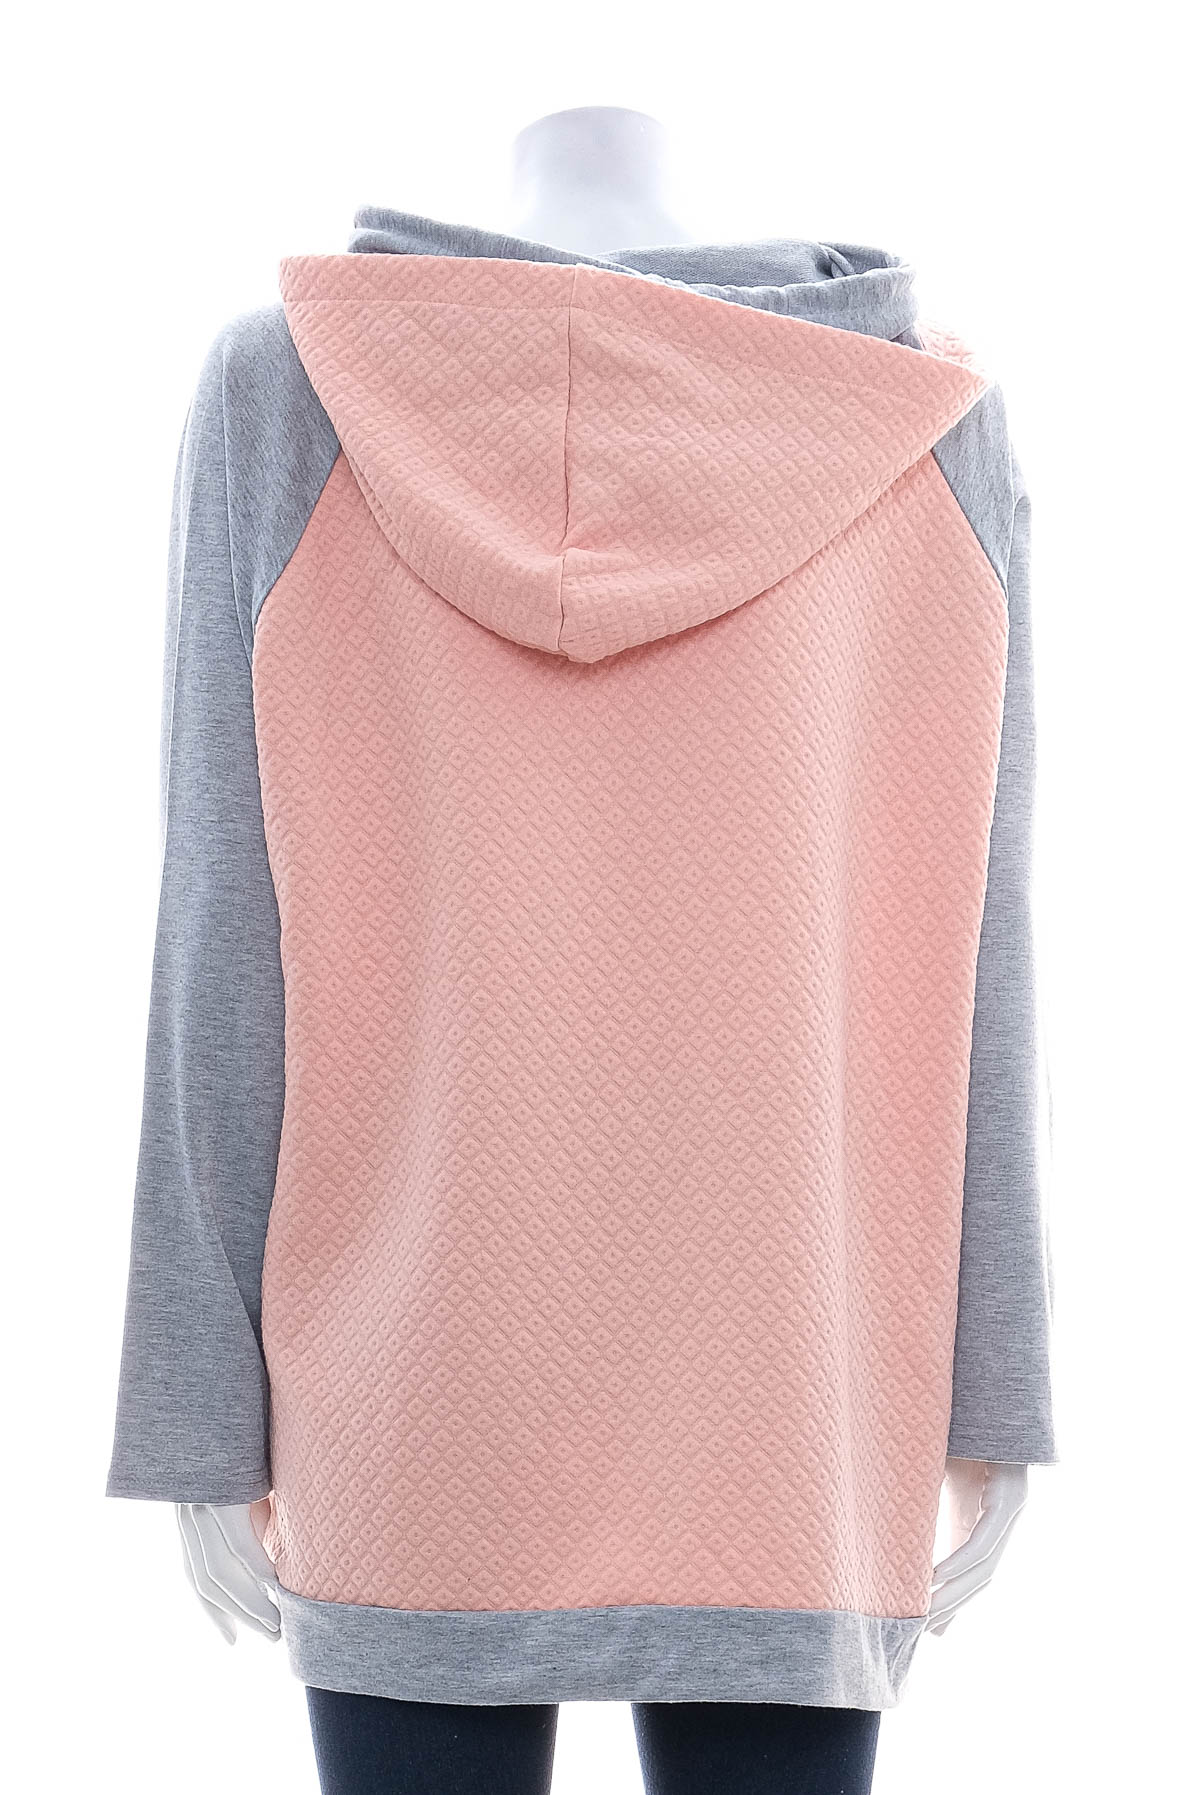 Women's sweatshirt - Yidarton - 1